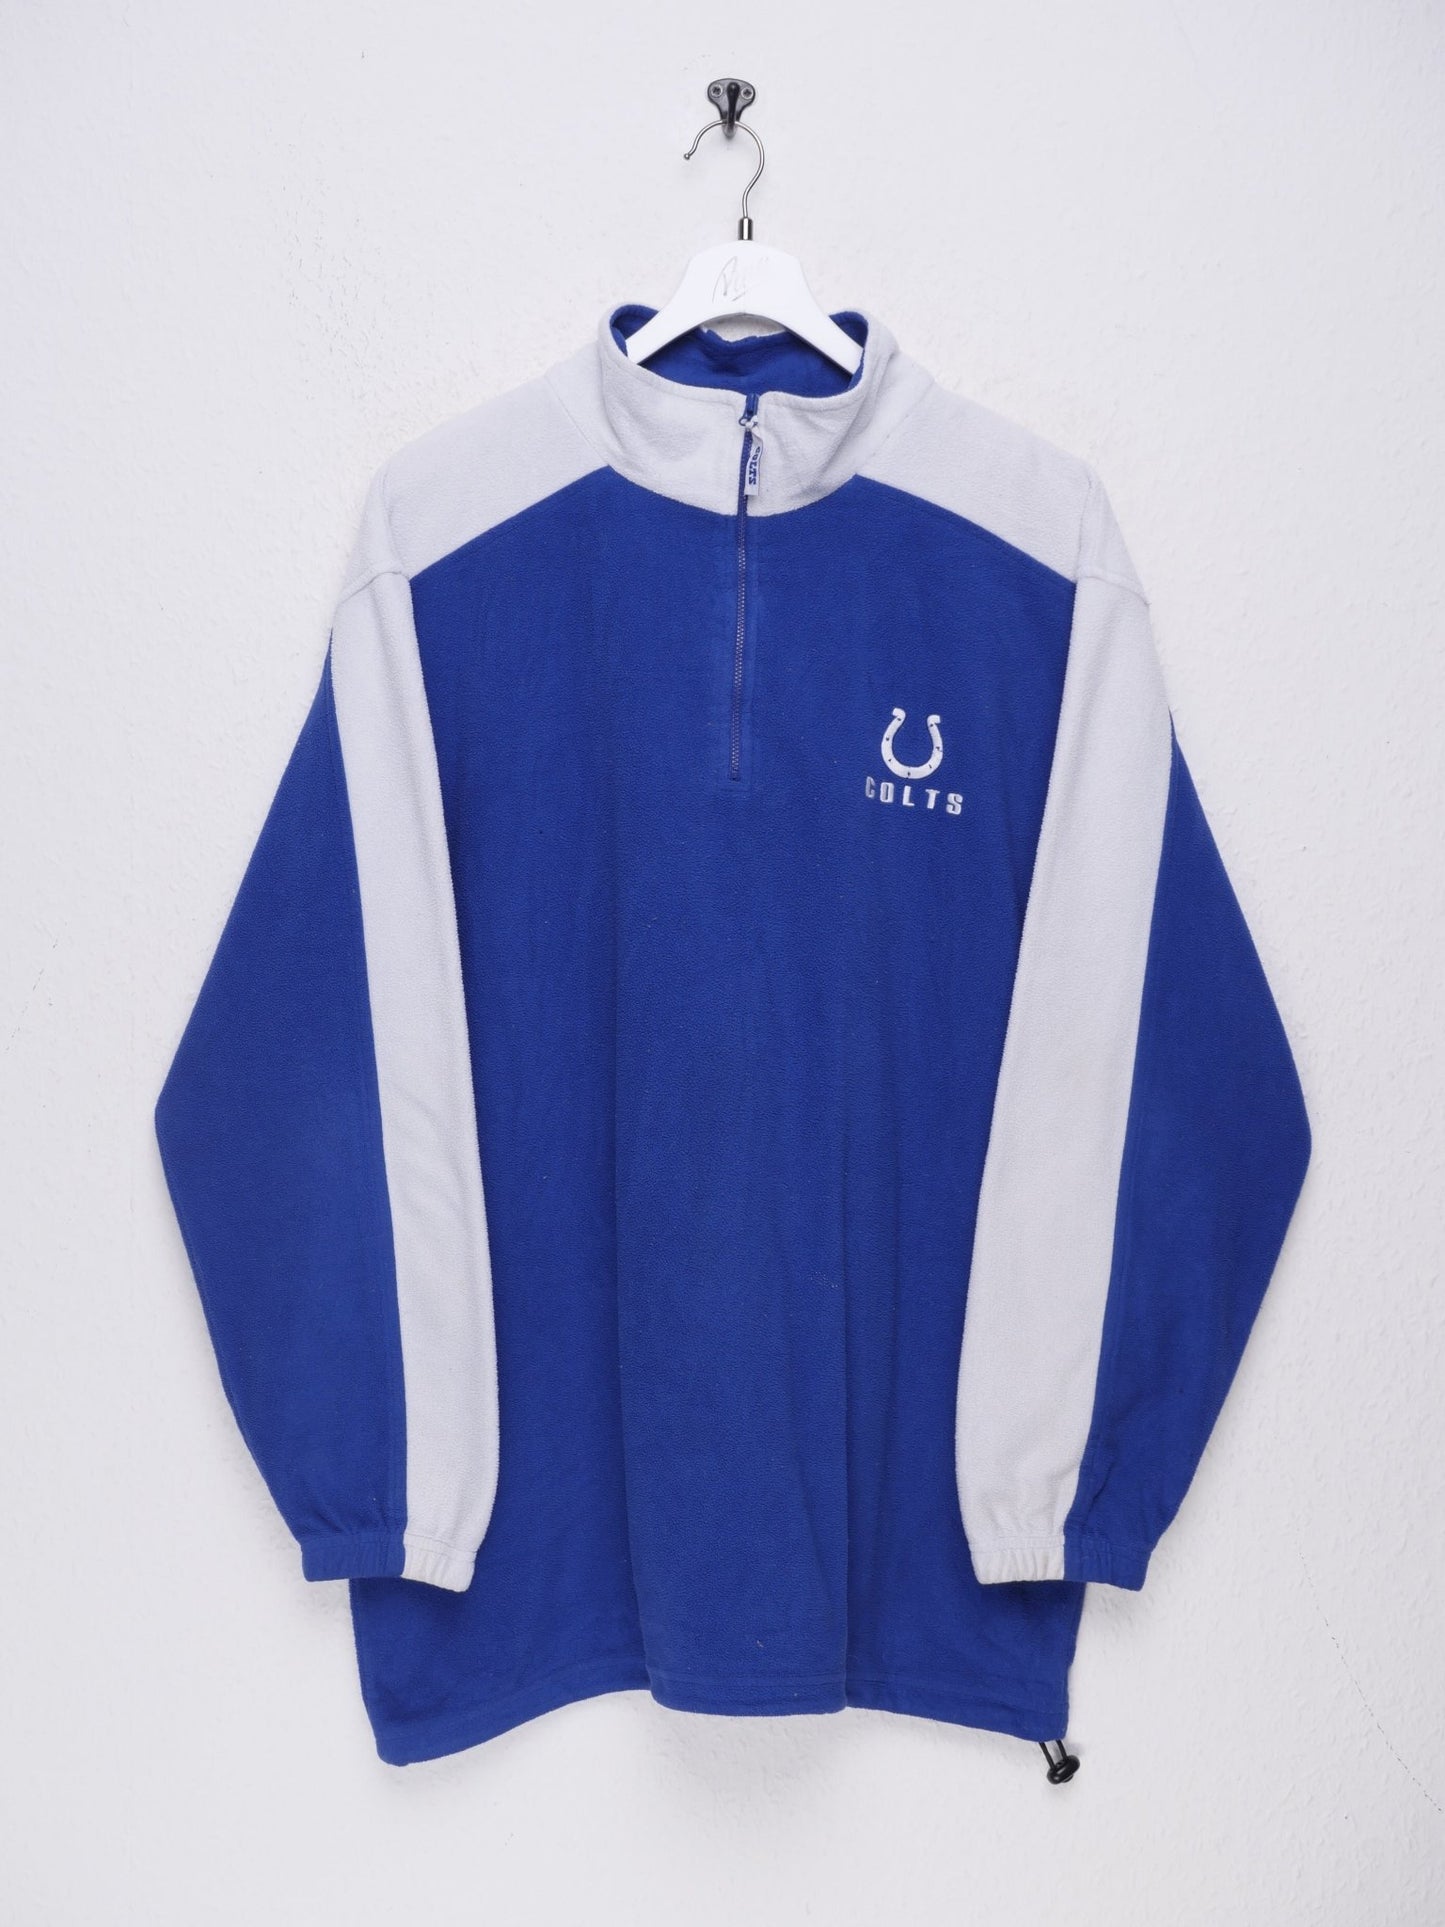 NFL embroidered Colts Logo Fleece Half Zip Sweater - Peeces